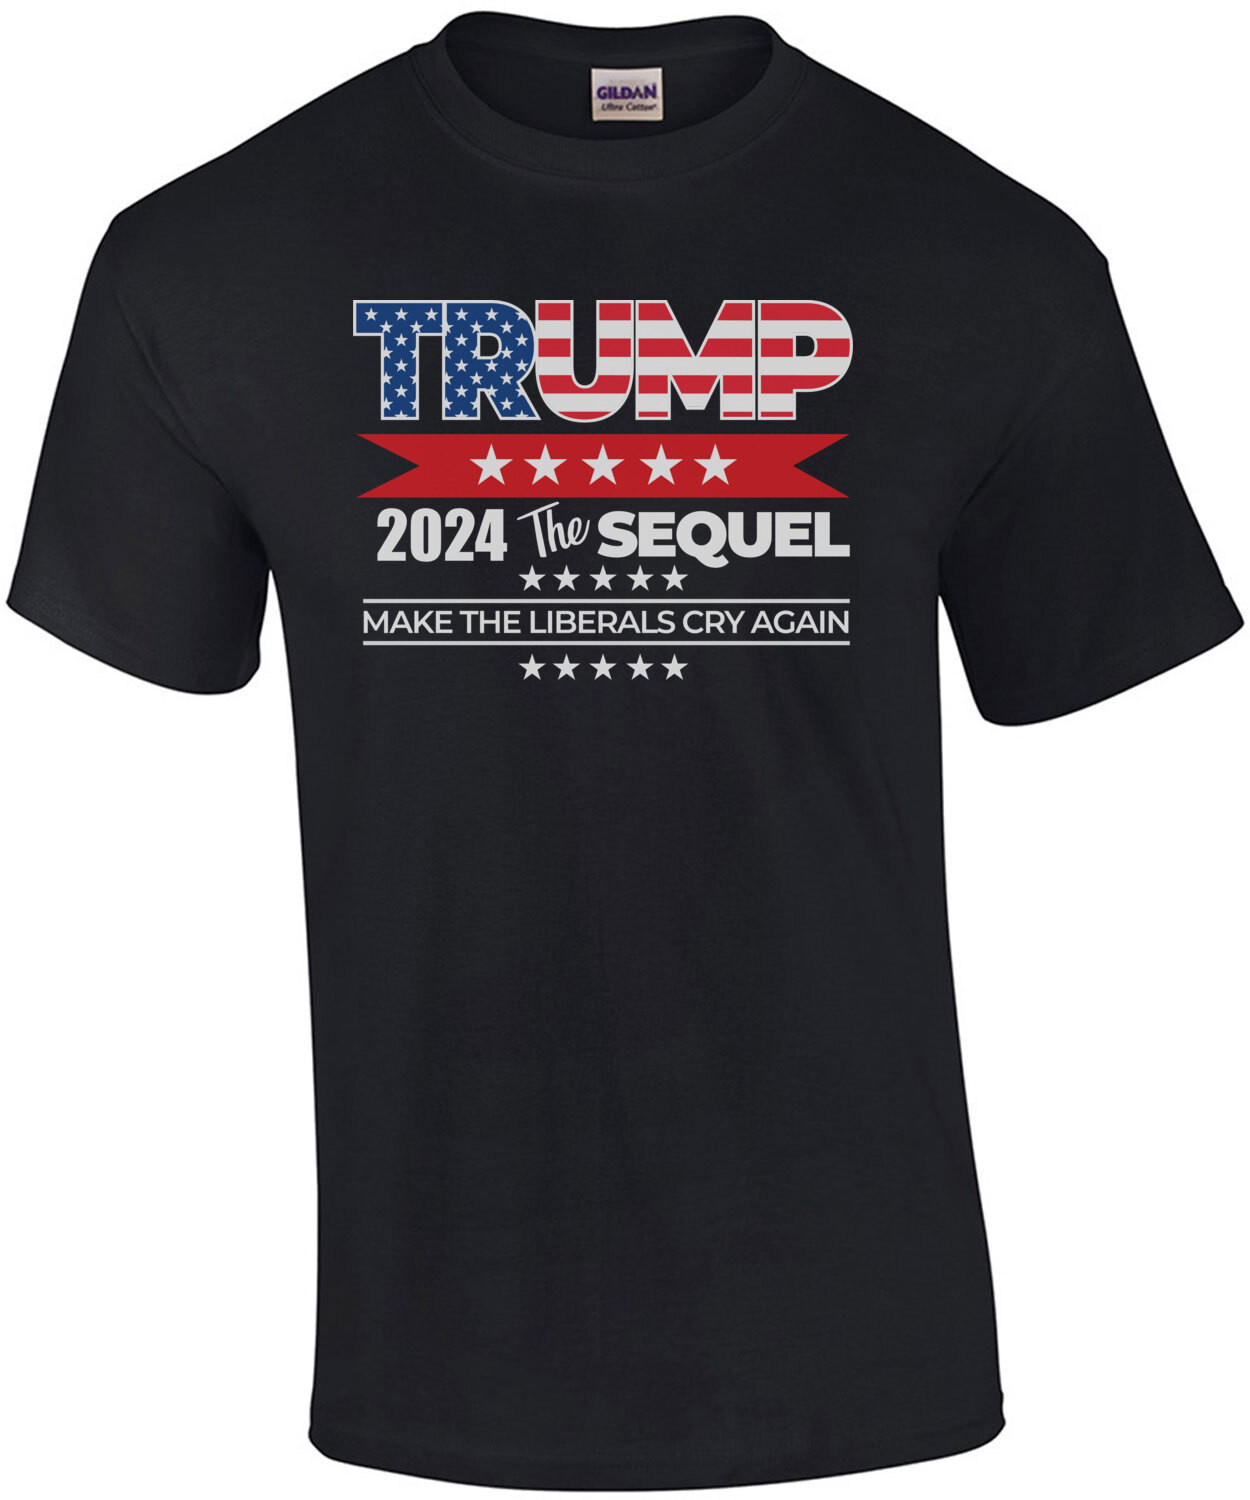 Trump 2024 The Sequel - Make the liberals cry again - Pro Trump Election 2024 - Conservative Republican T-Shirt